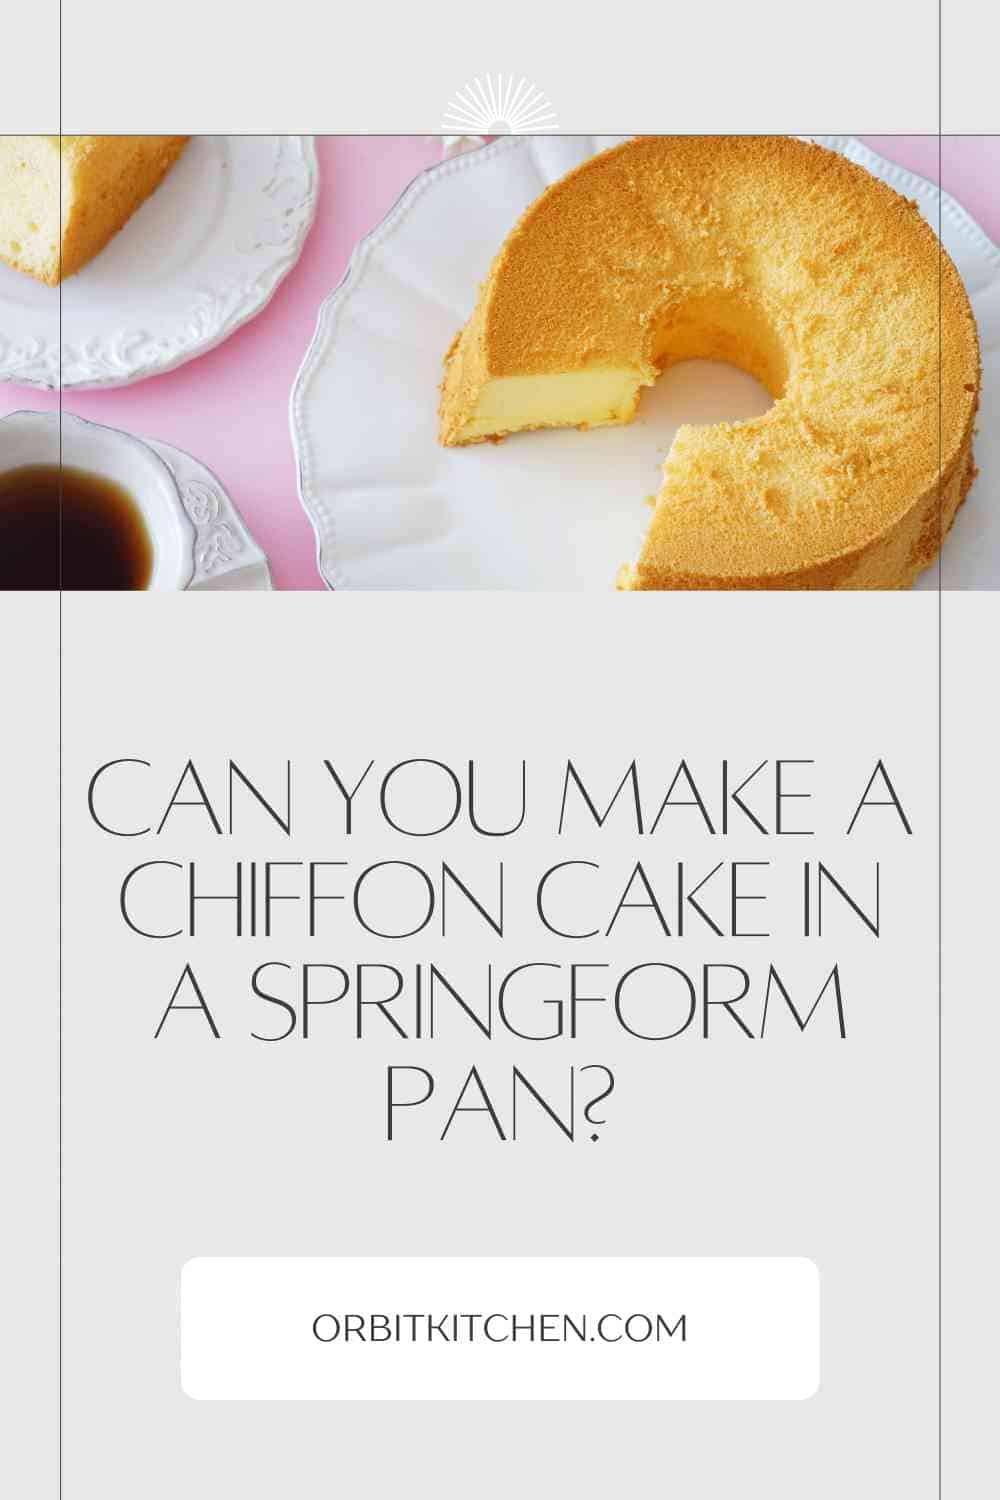 Can You Make a Chiffon Cake in a Springform Pan